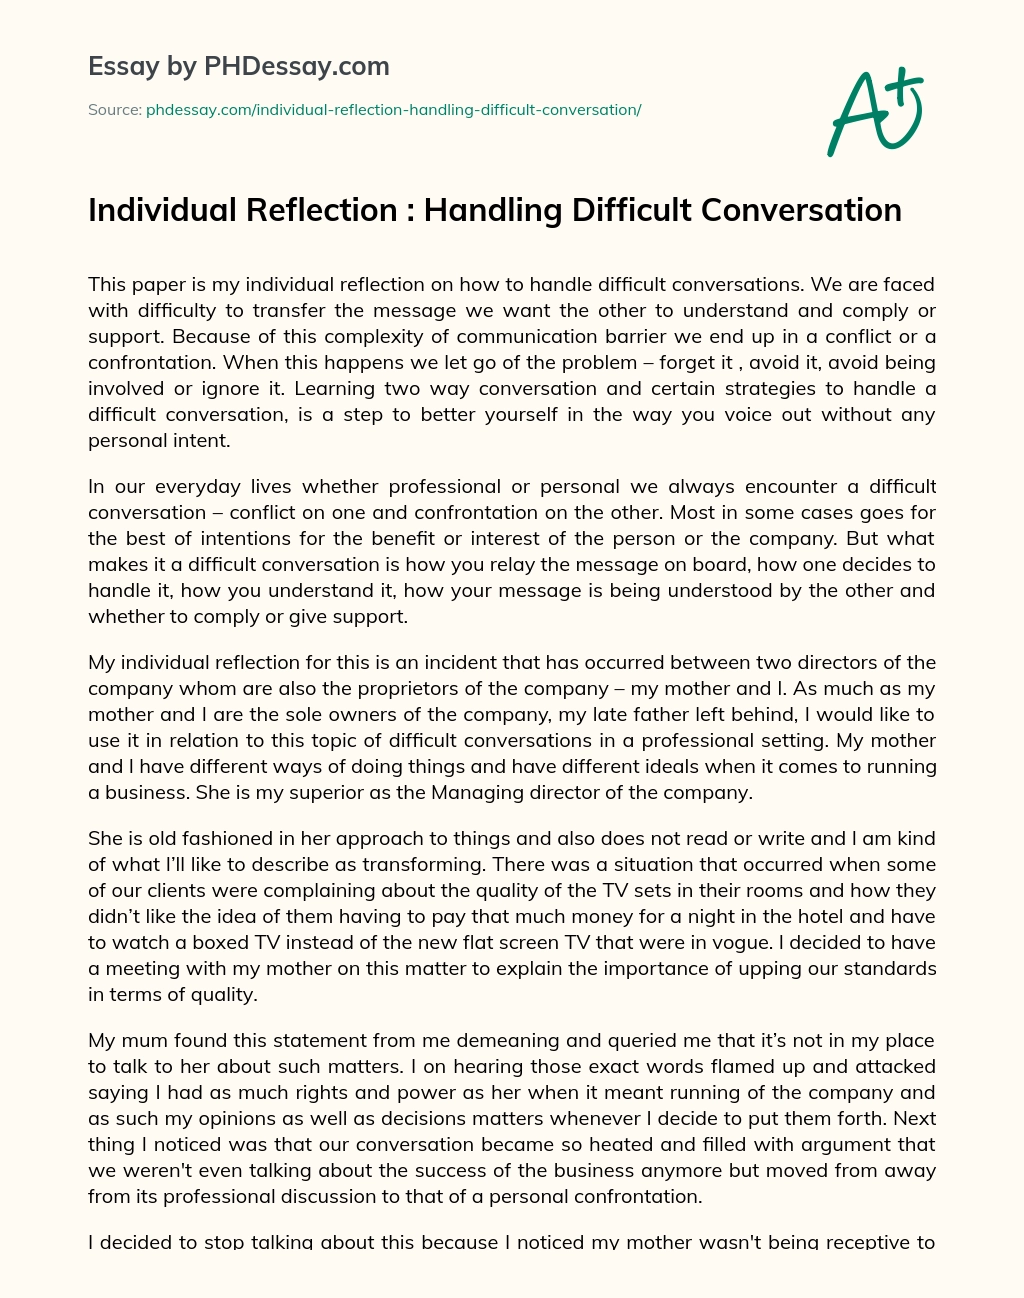 Individual Reflection : Handling Difficult Conversation essay